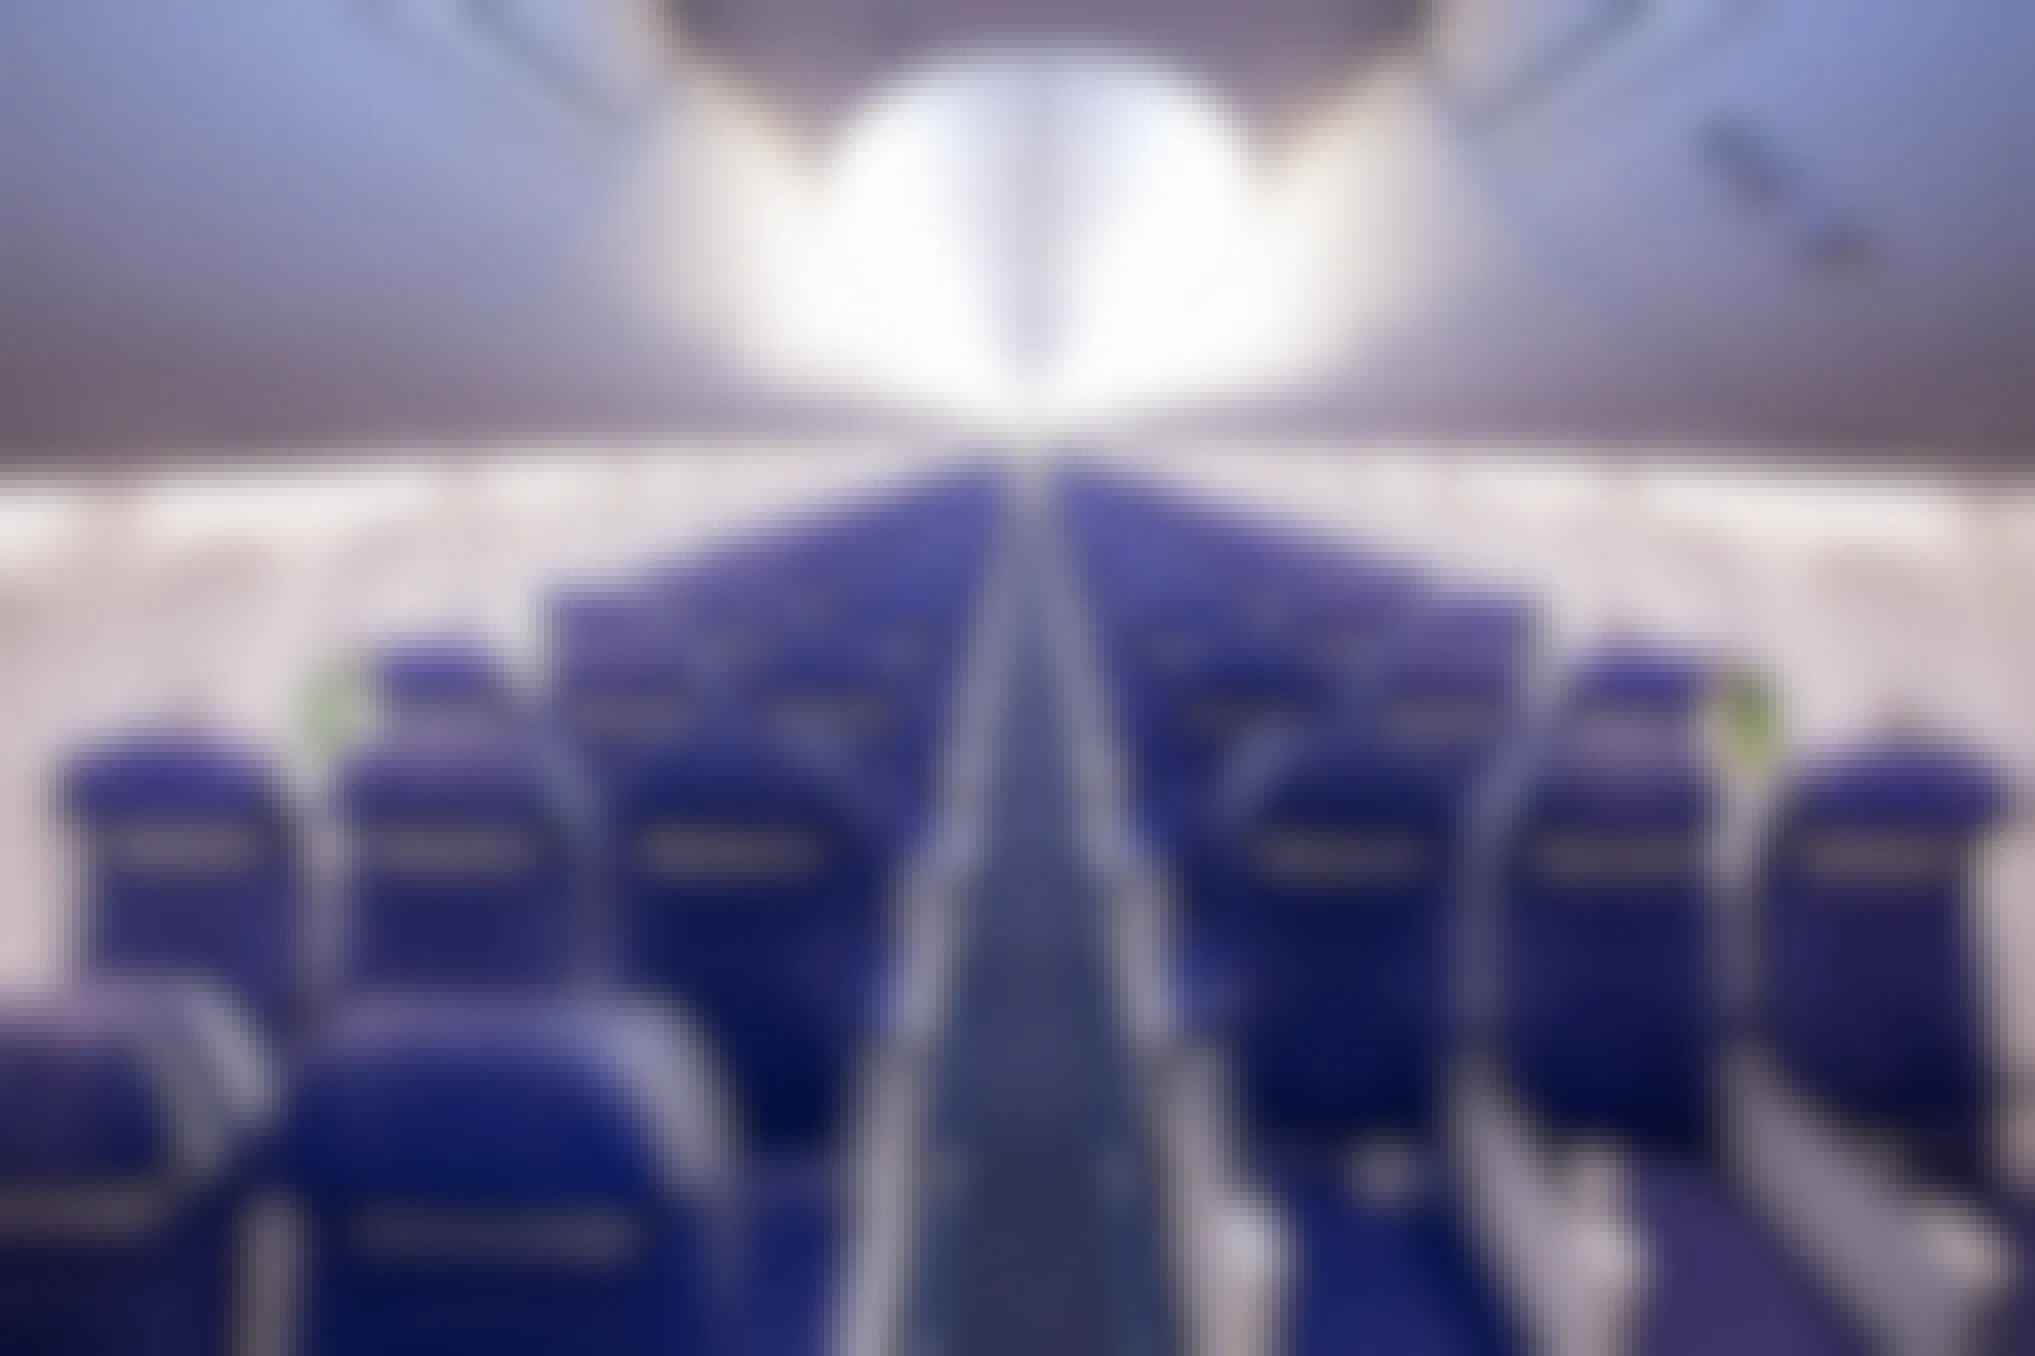 empty blue seats on Southwest Airline plane